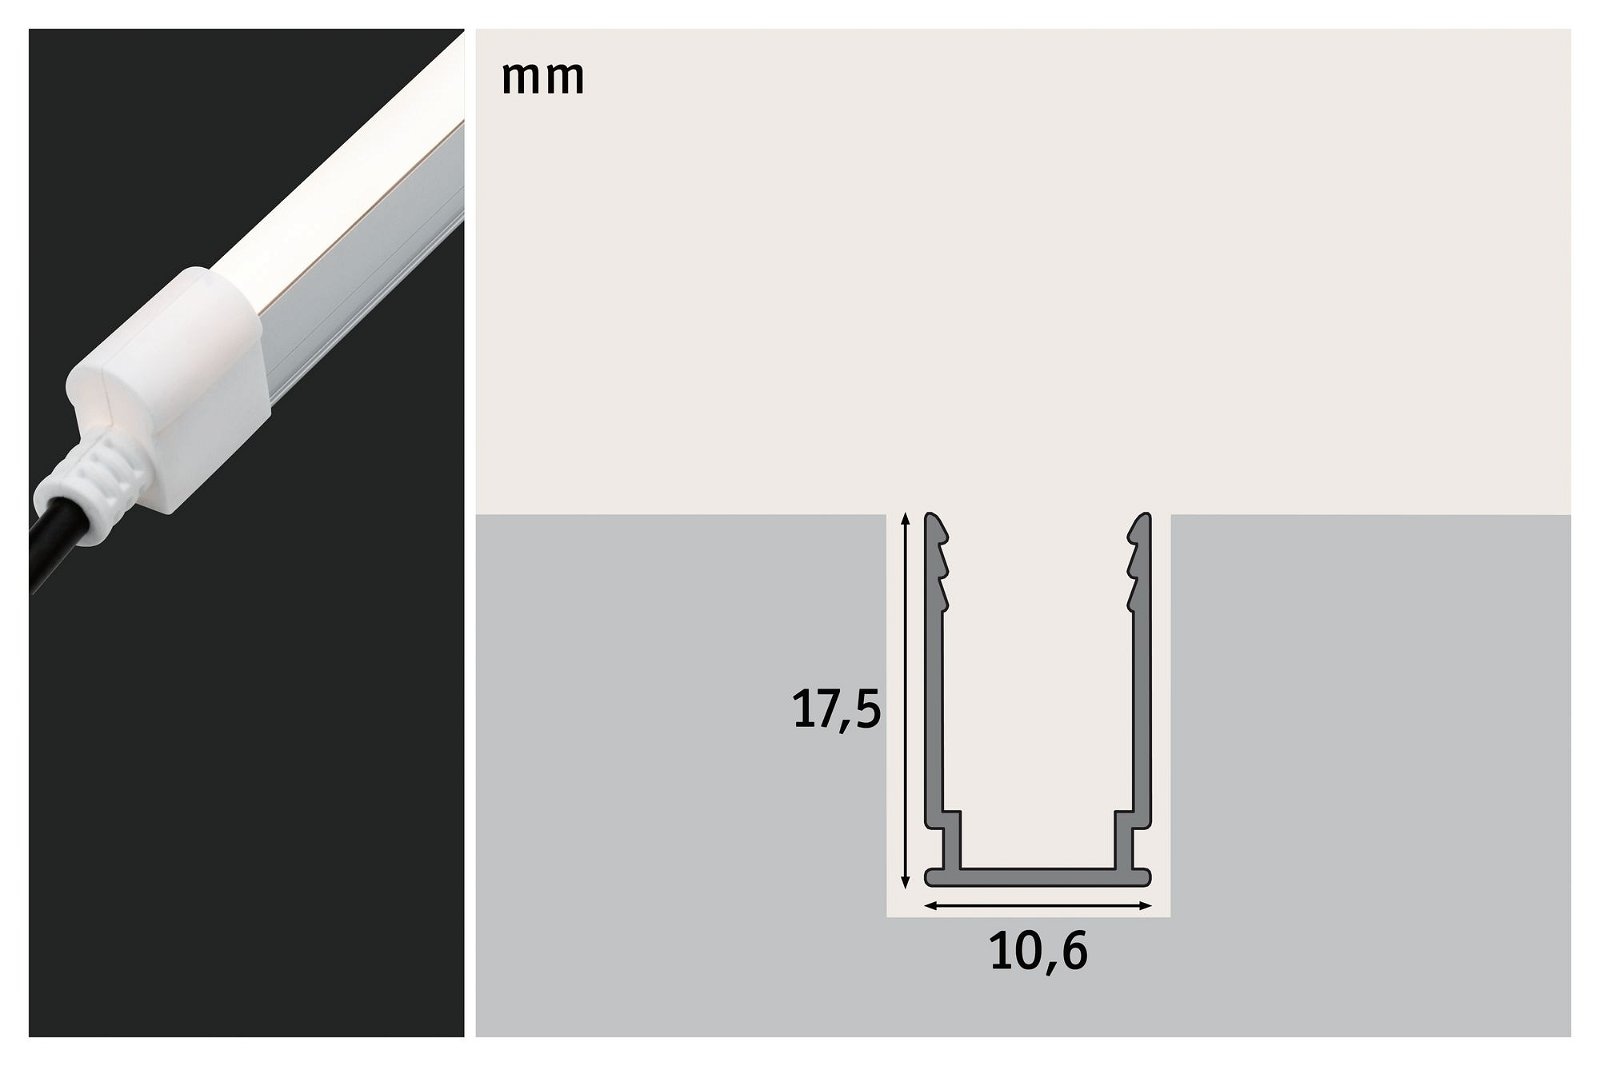 Paulmann Gartenleuchte »Plug & Shine LED Strip Profil Warmweiß Aluminiumprofil 1m«